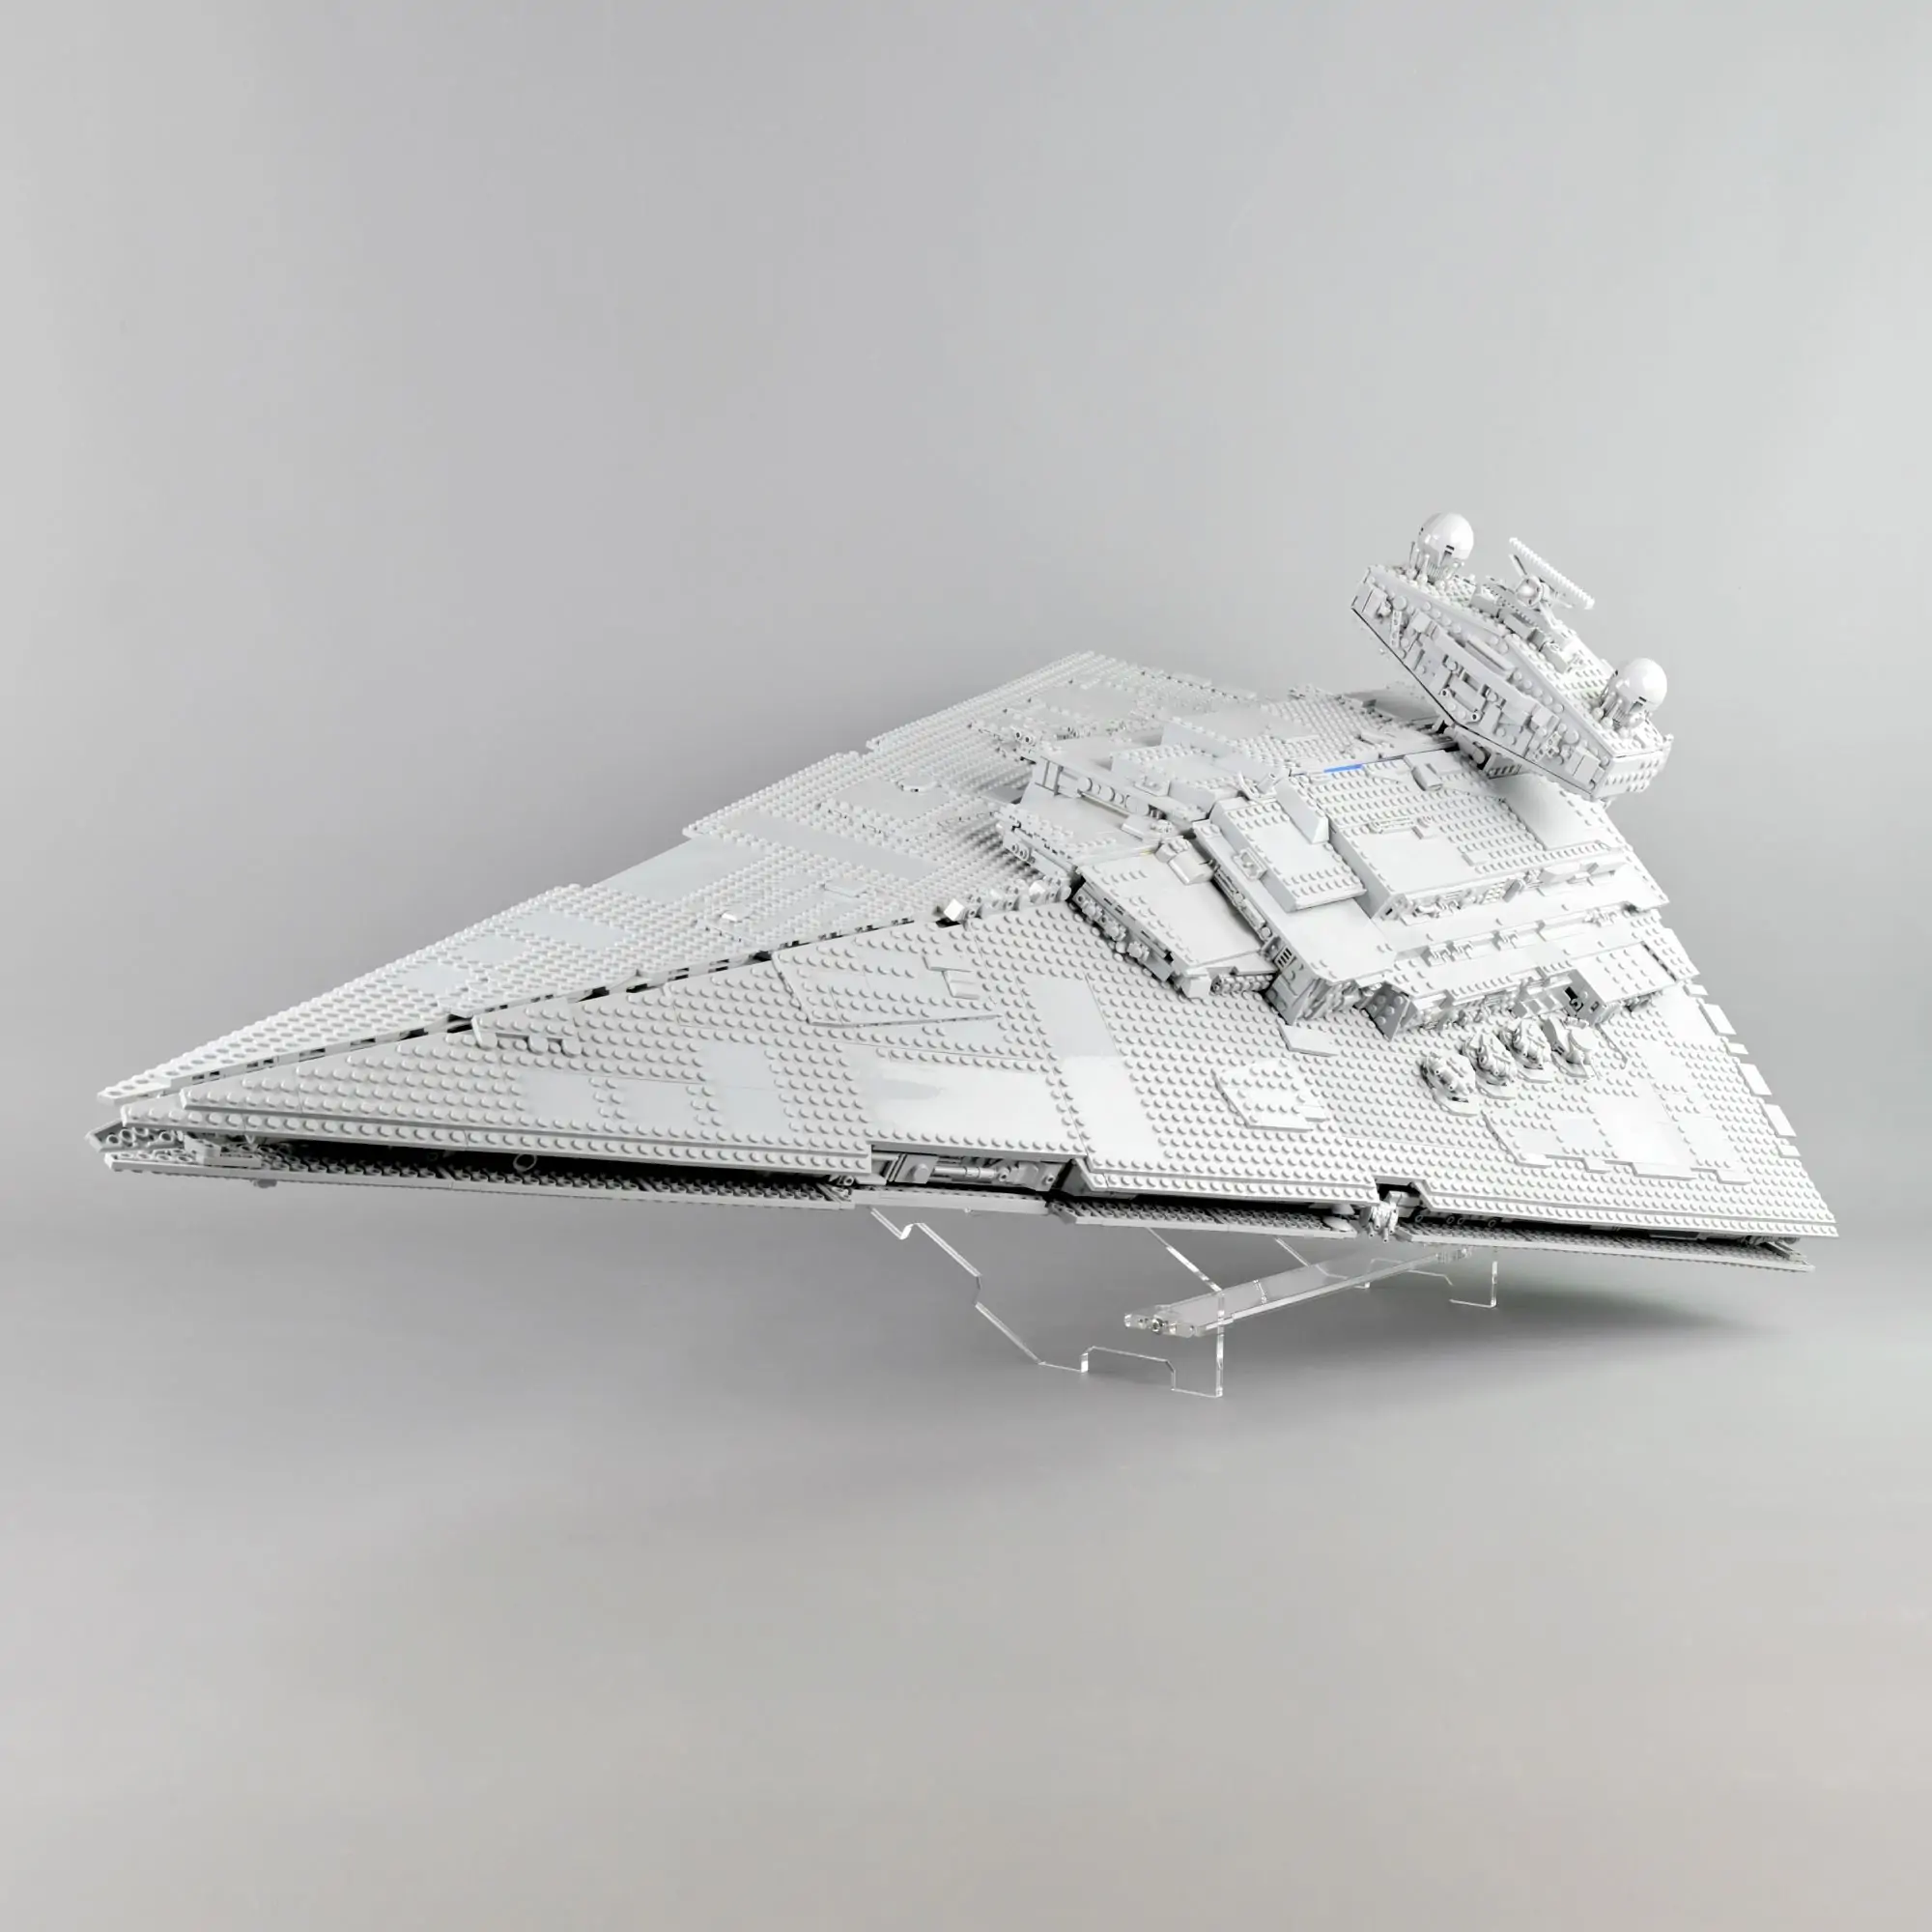 Lego Star Wars - Imperial Star Destroyer